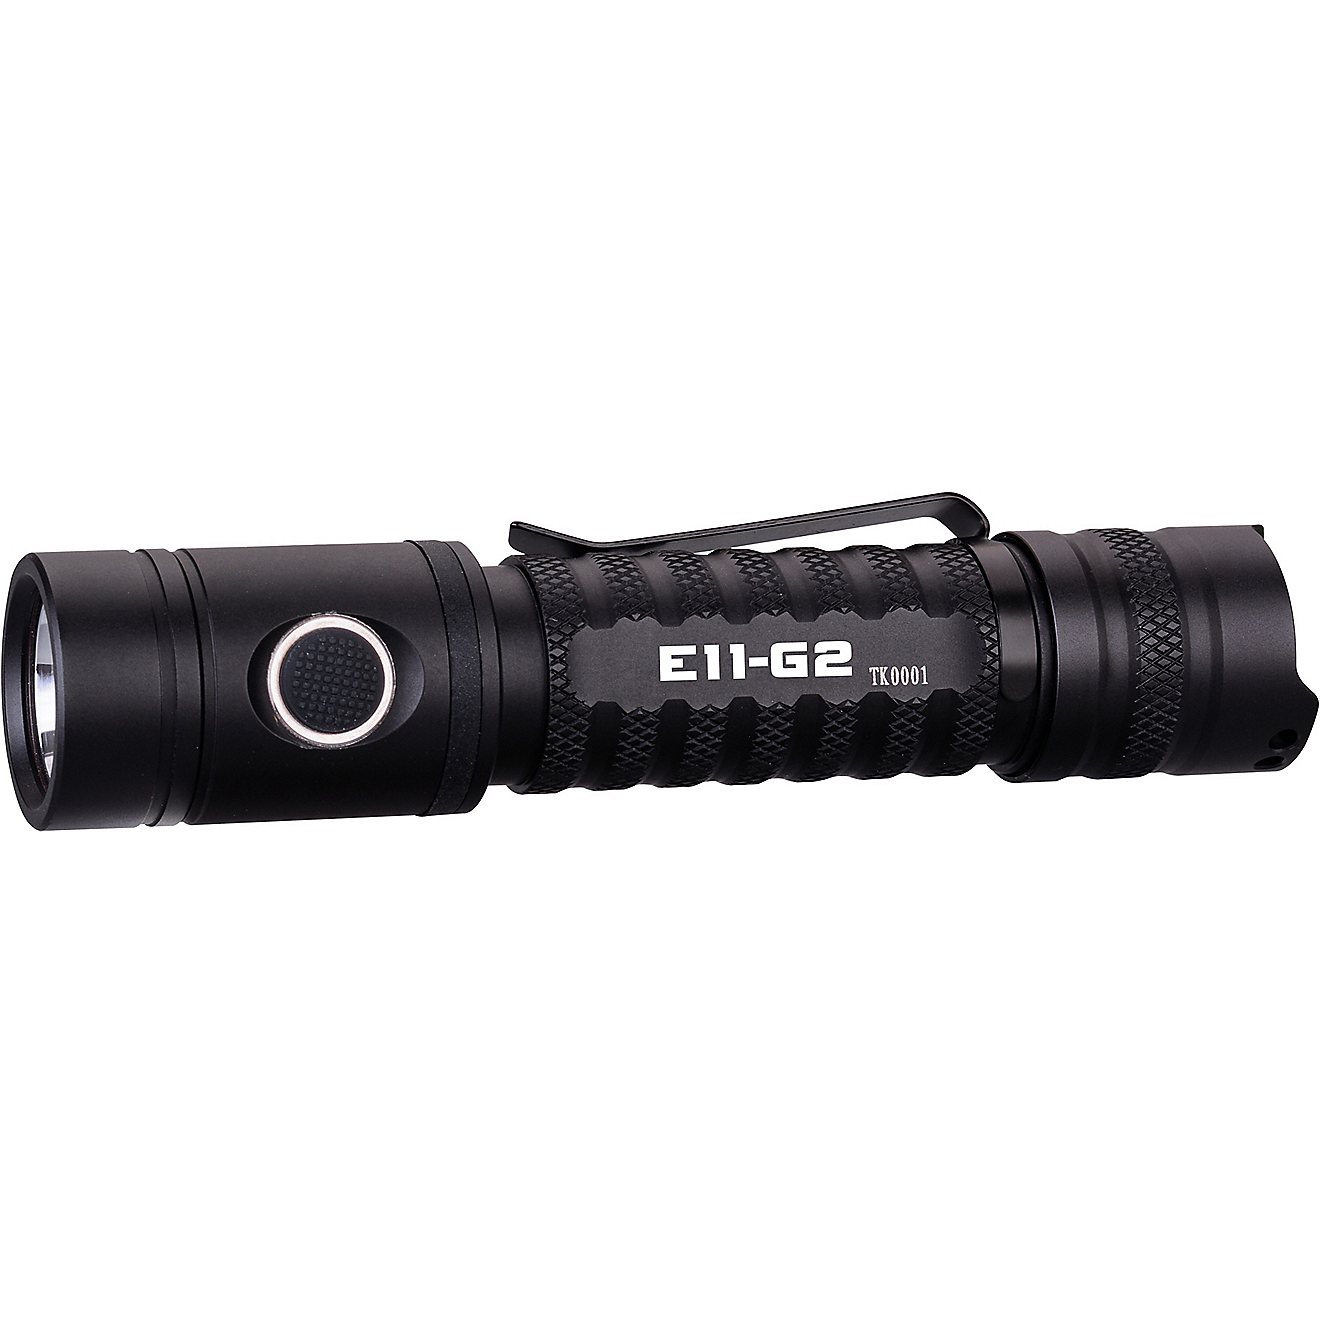 Powertac E11-G2 1,300 Lumen EDC Flashlight                                                                                       - view number 1